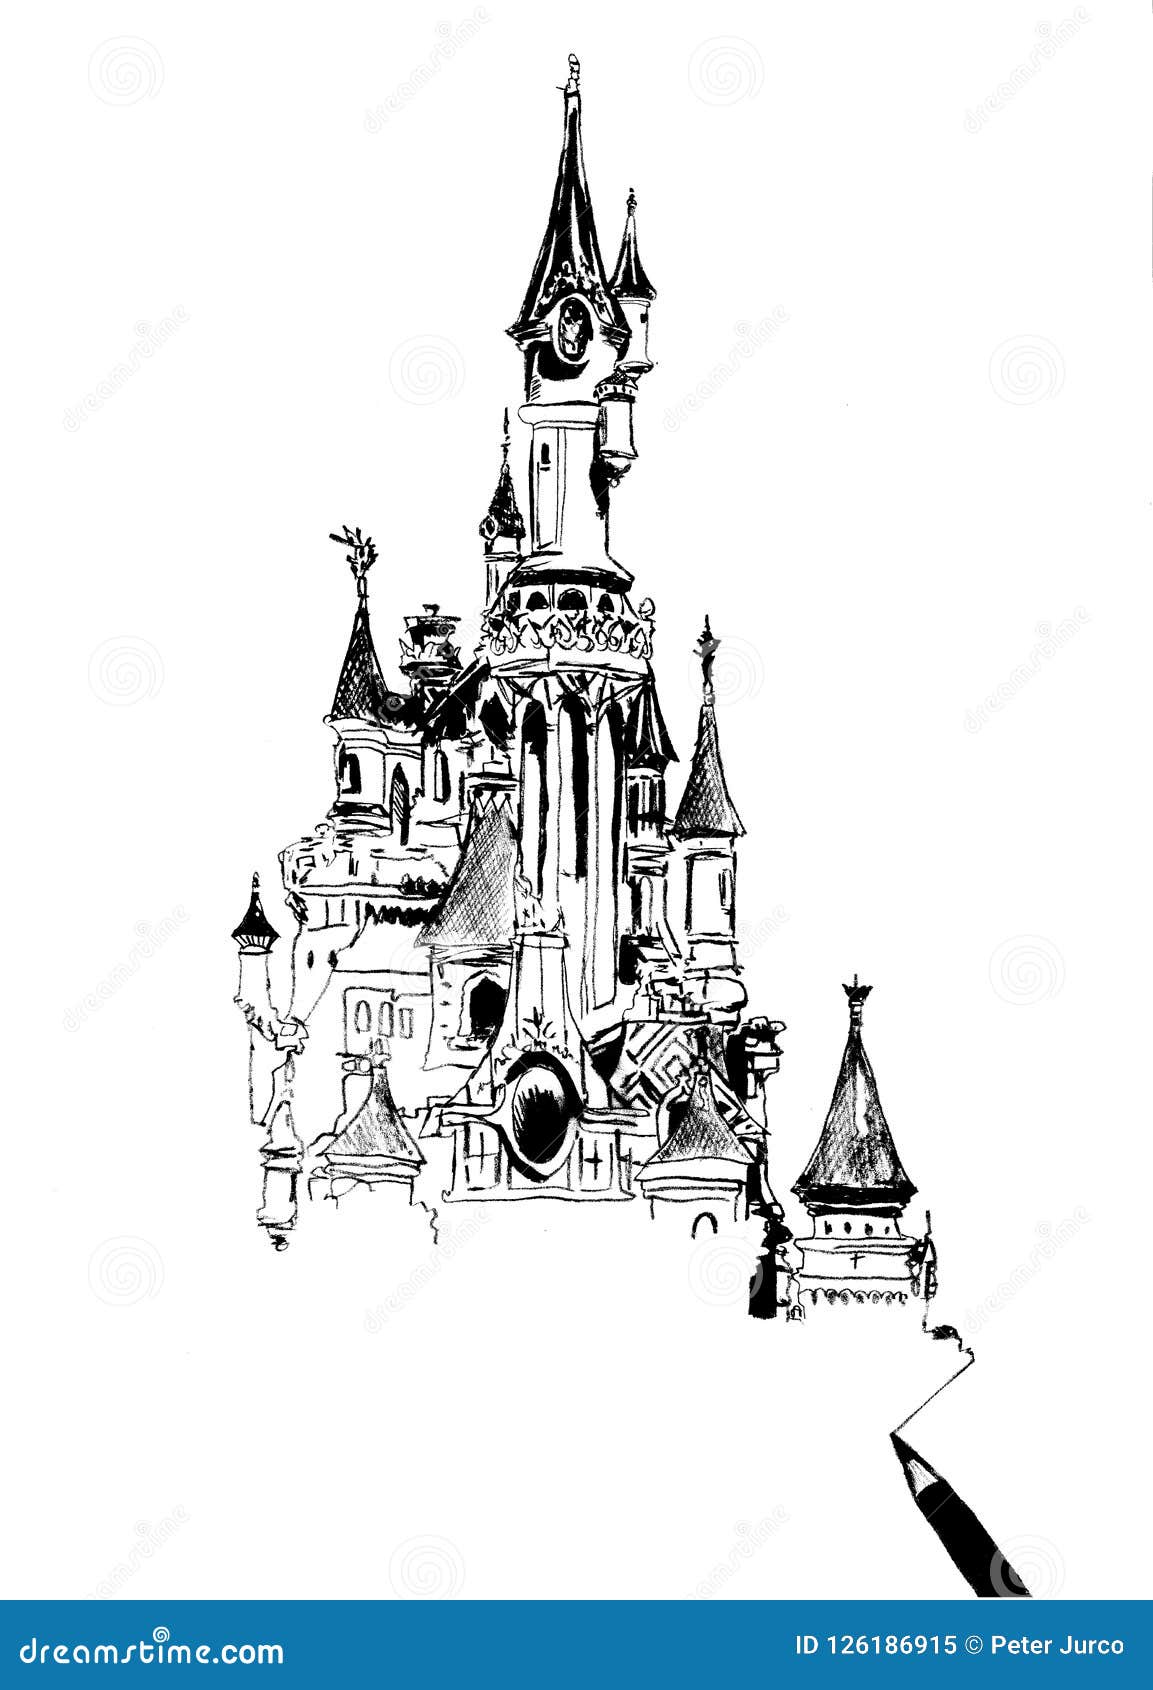 Disneyland Paris Hand Drawn Illustration Editorial Image